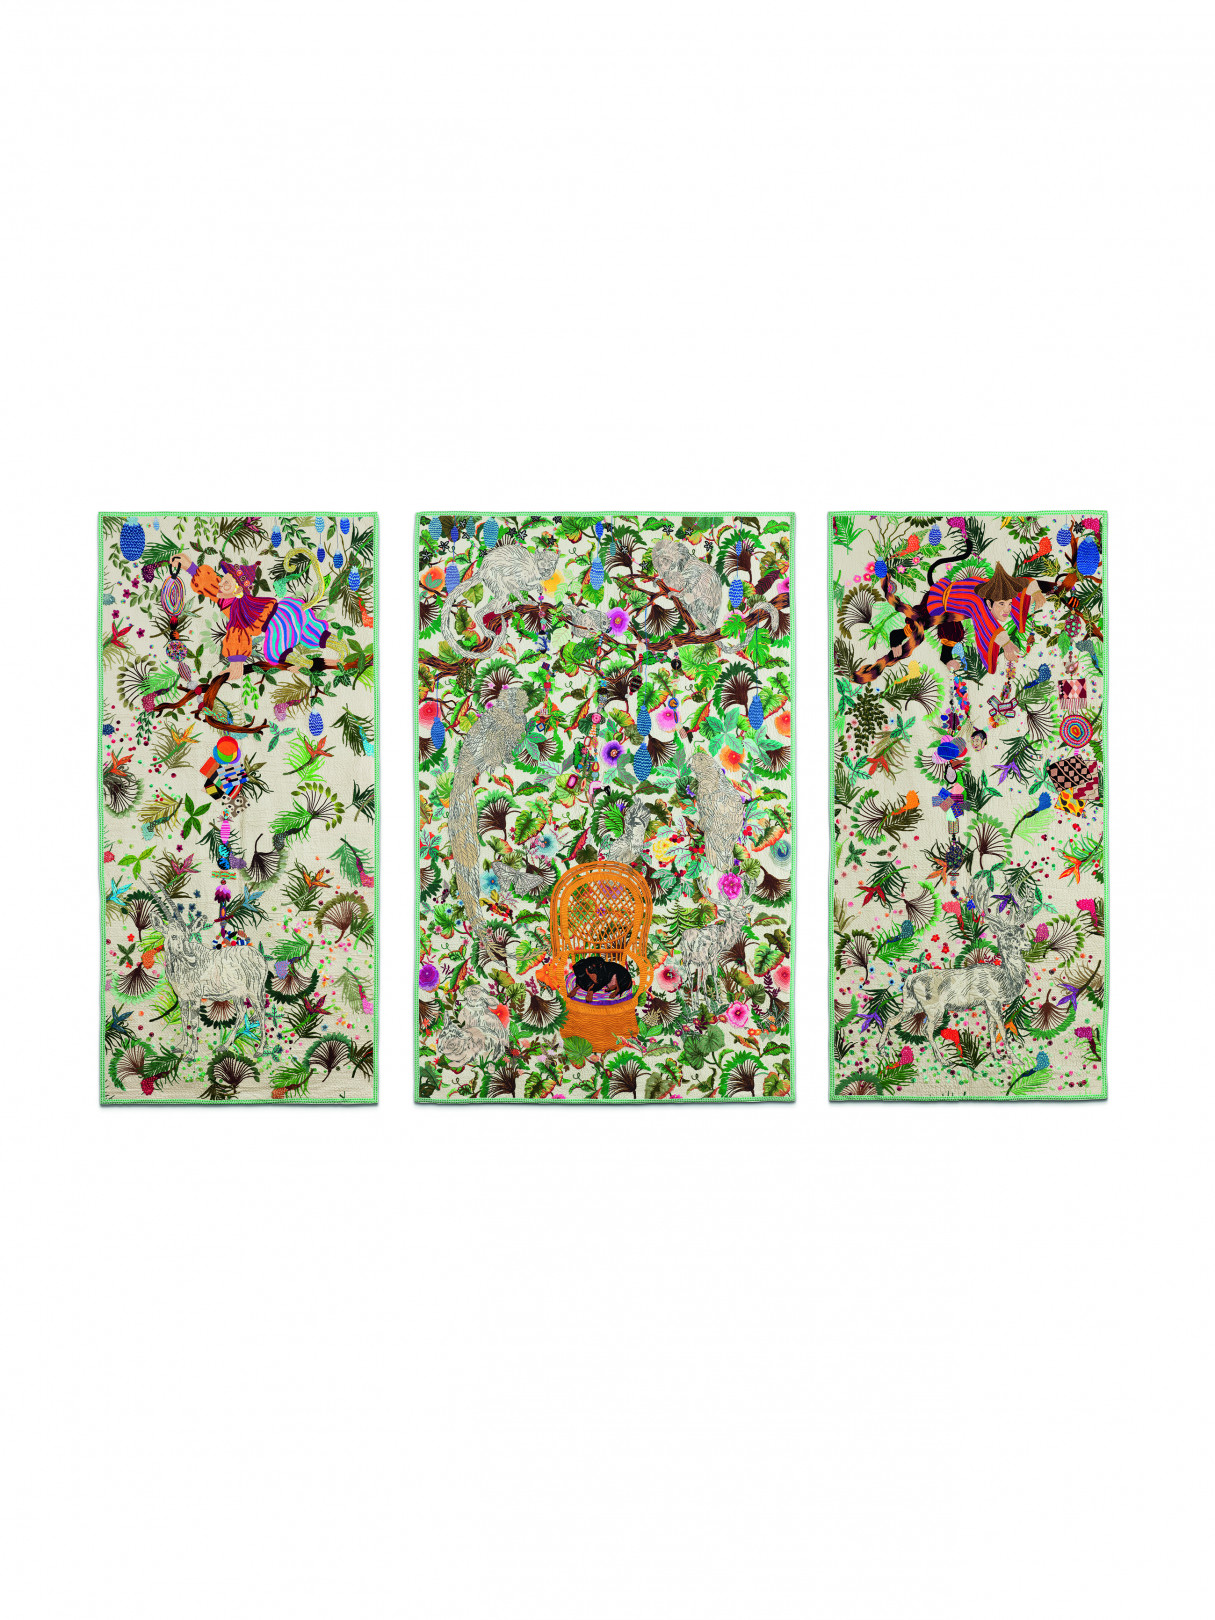 Chiachio & Giannone, Argentina Leonardo Chiachio, Daniel Giannone ‘Selva Blanca’, hilos de algodón, rayón y efecto joya, 460 x 285 cm. 3 piezas 2015